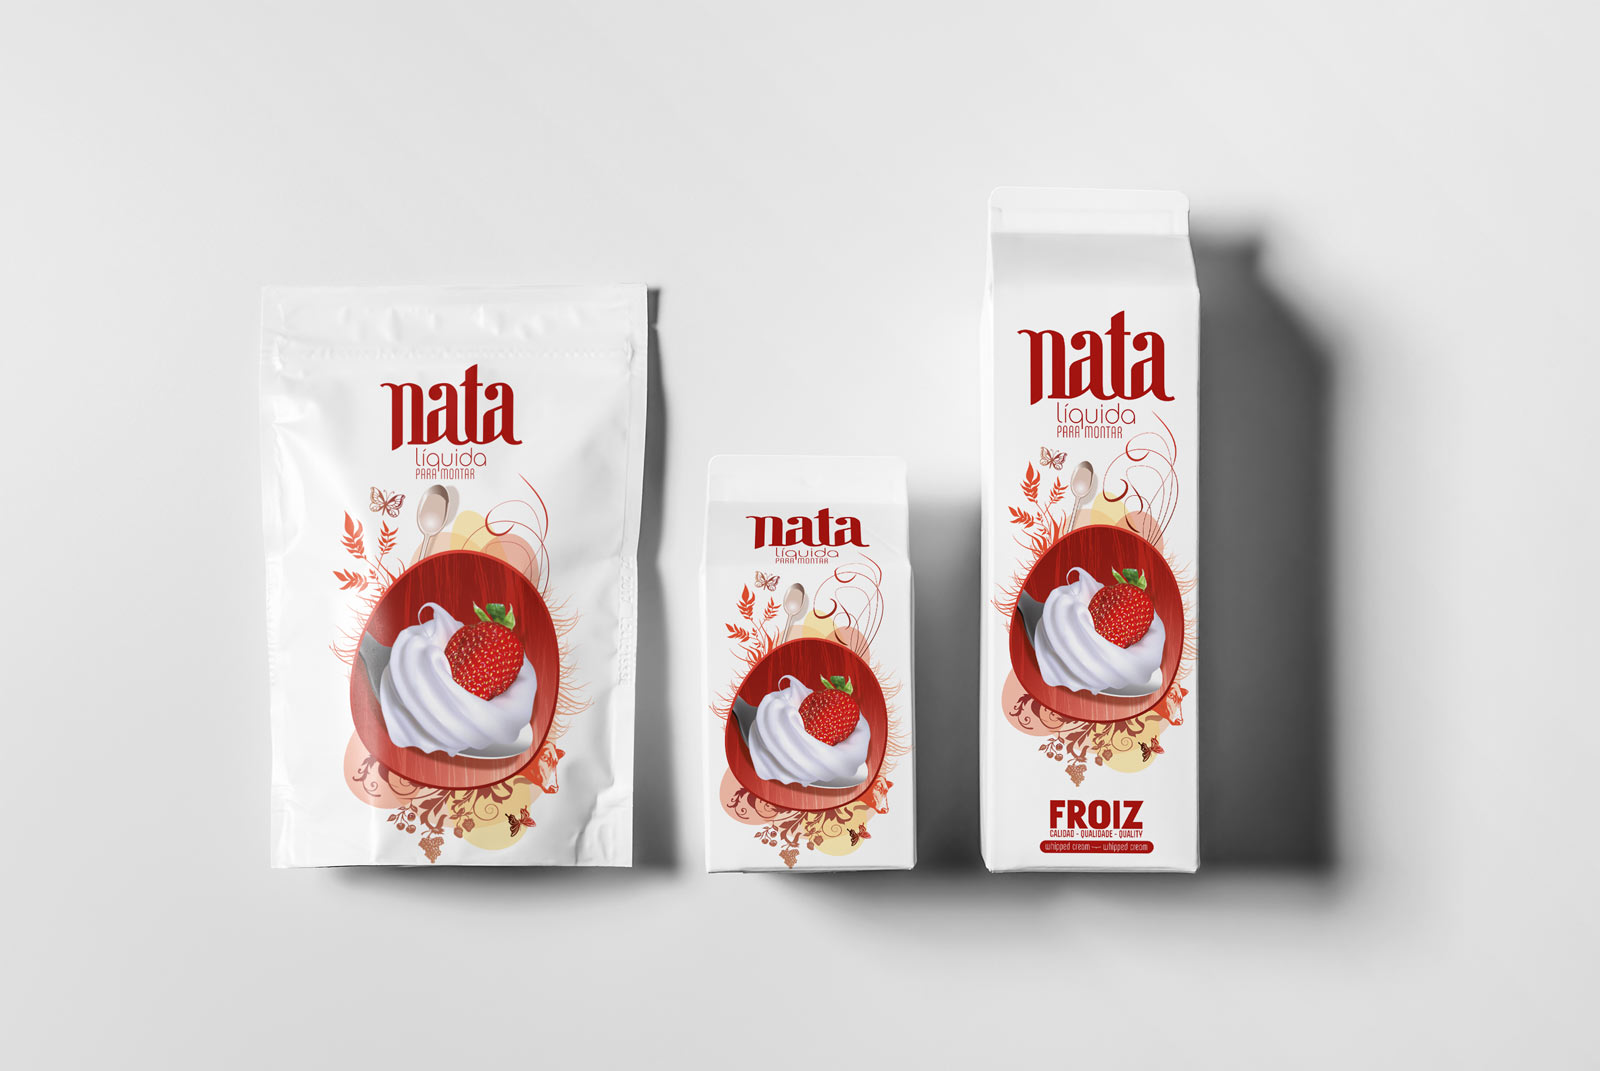 Froiz-nata-packaging-02